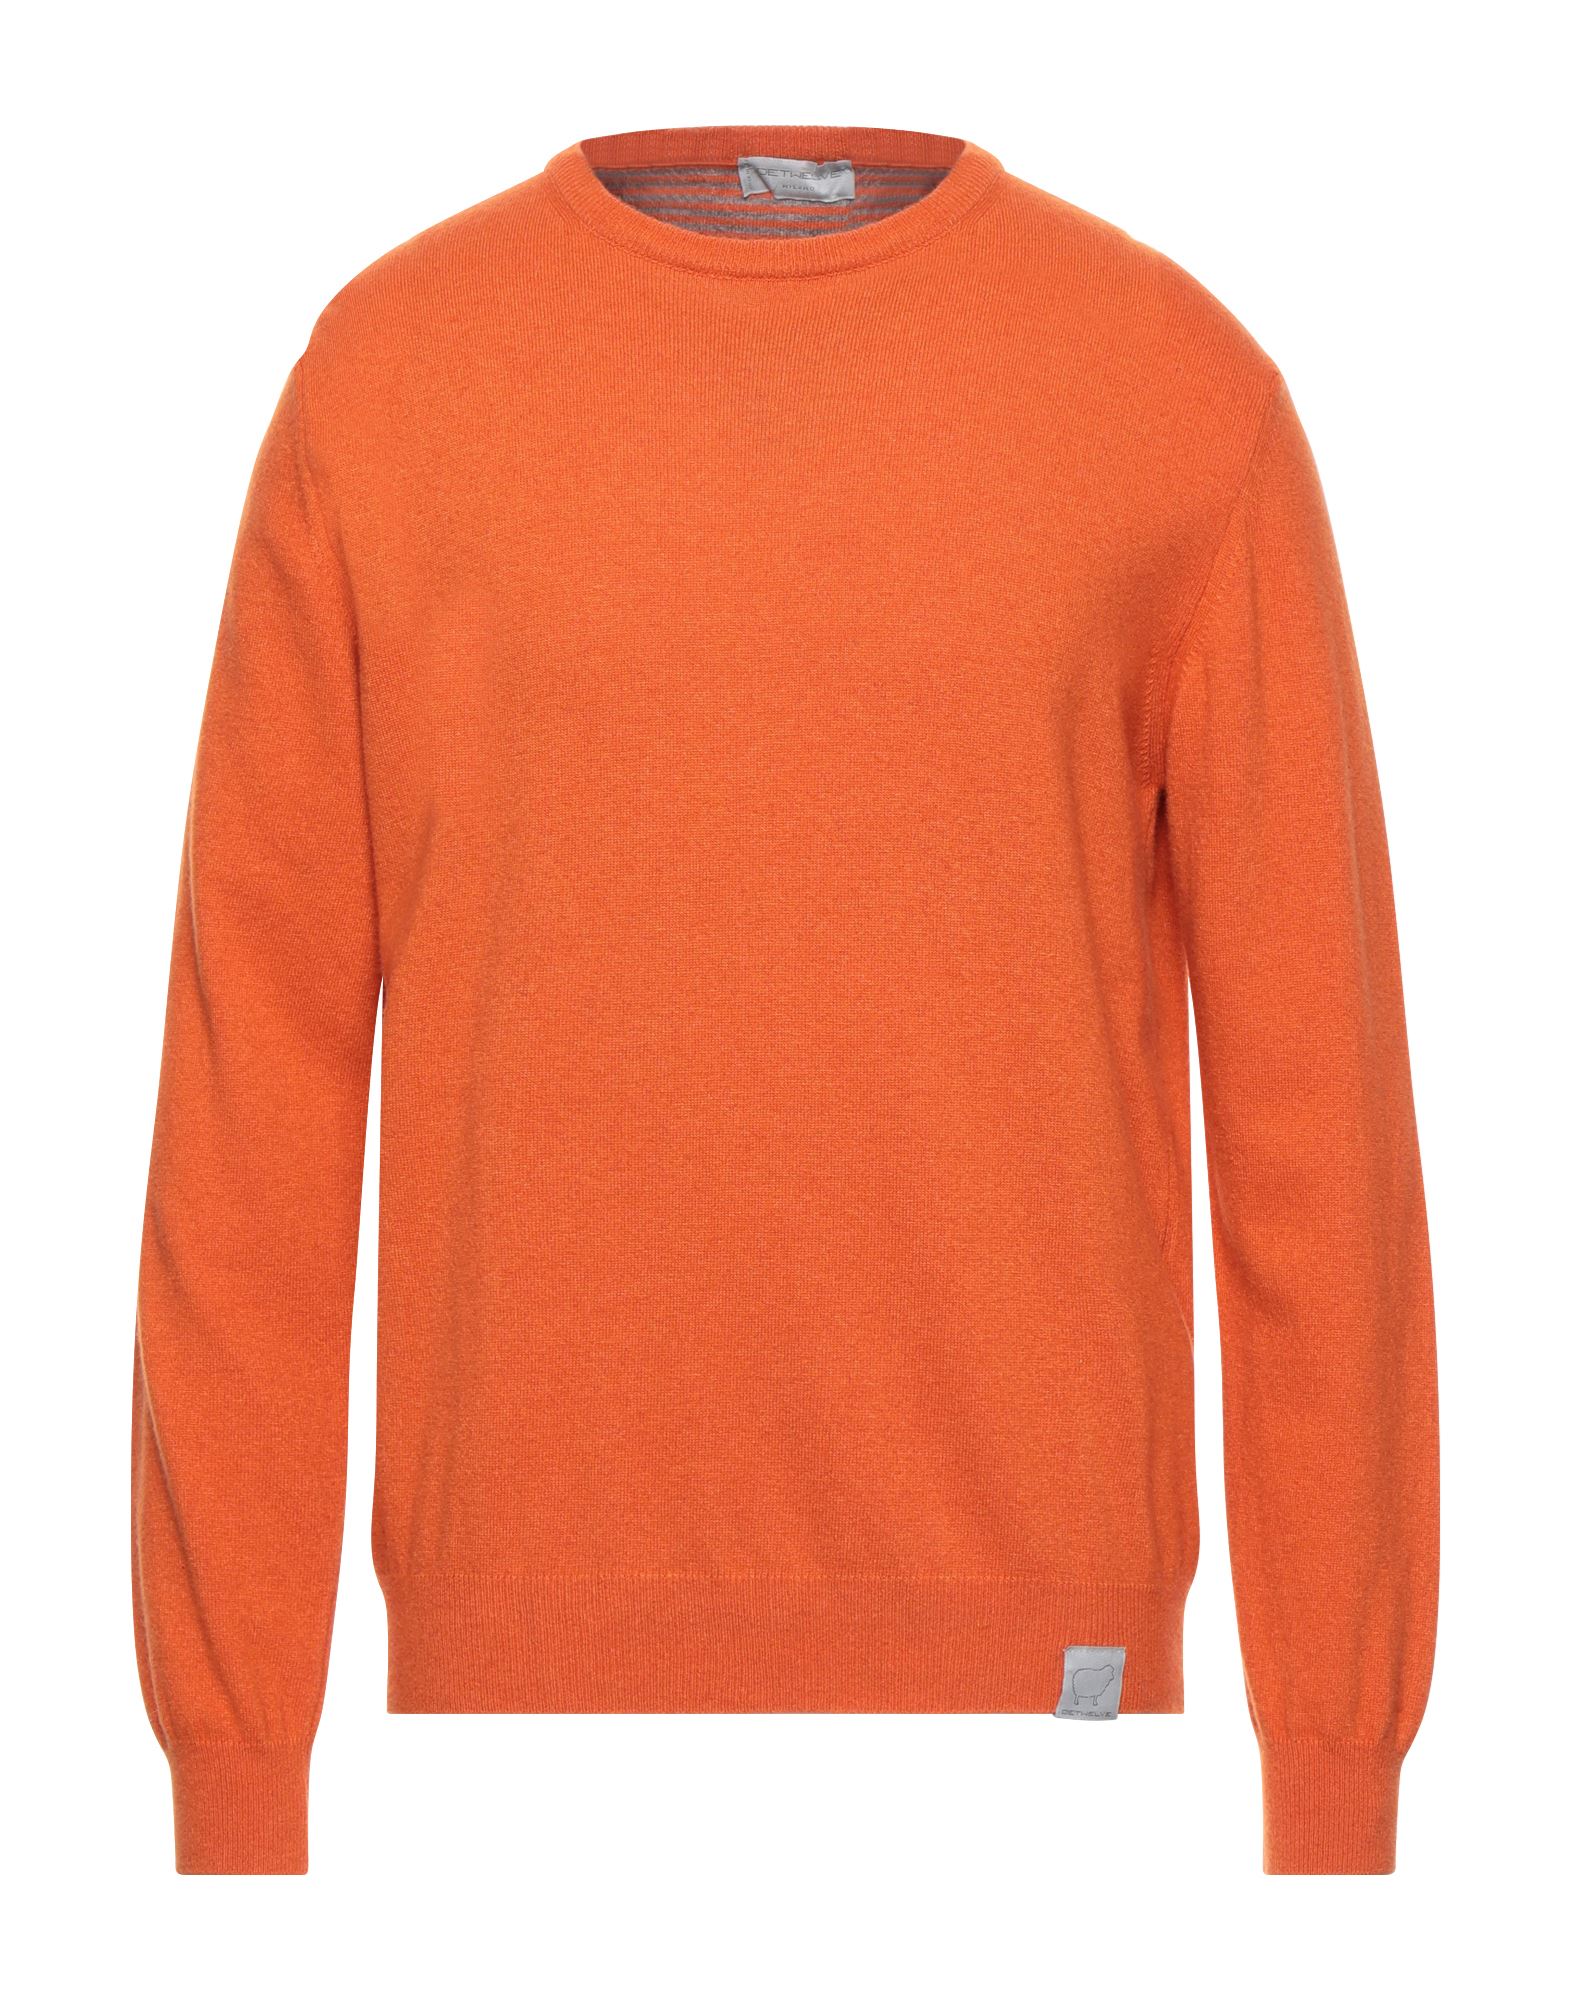 Detwelve Sweaters In Orange